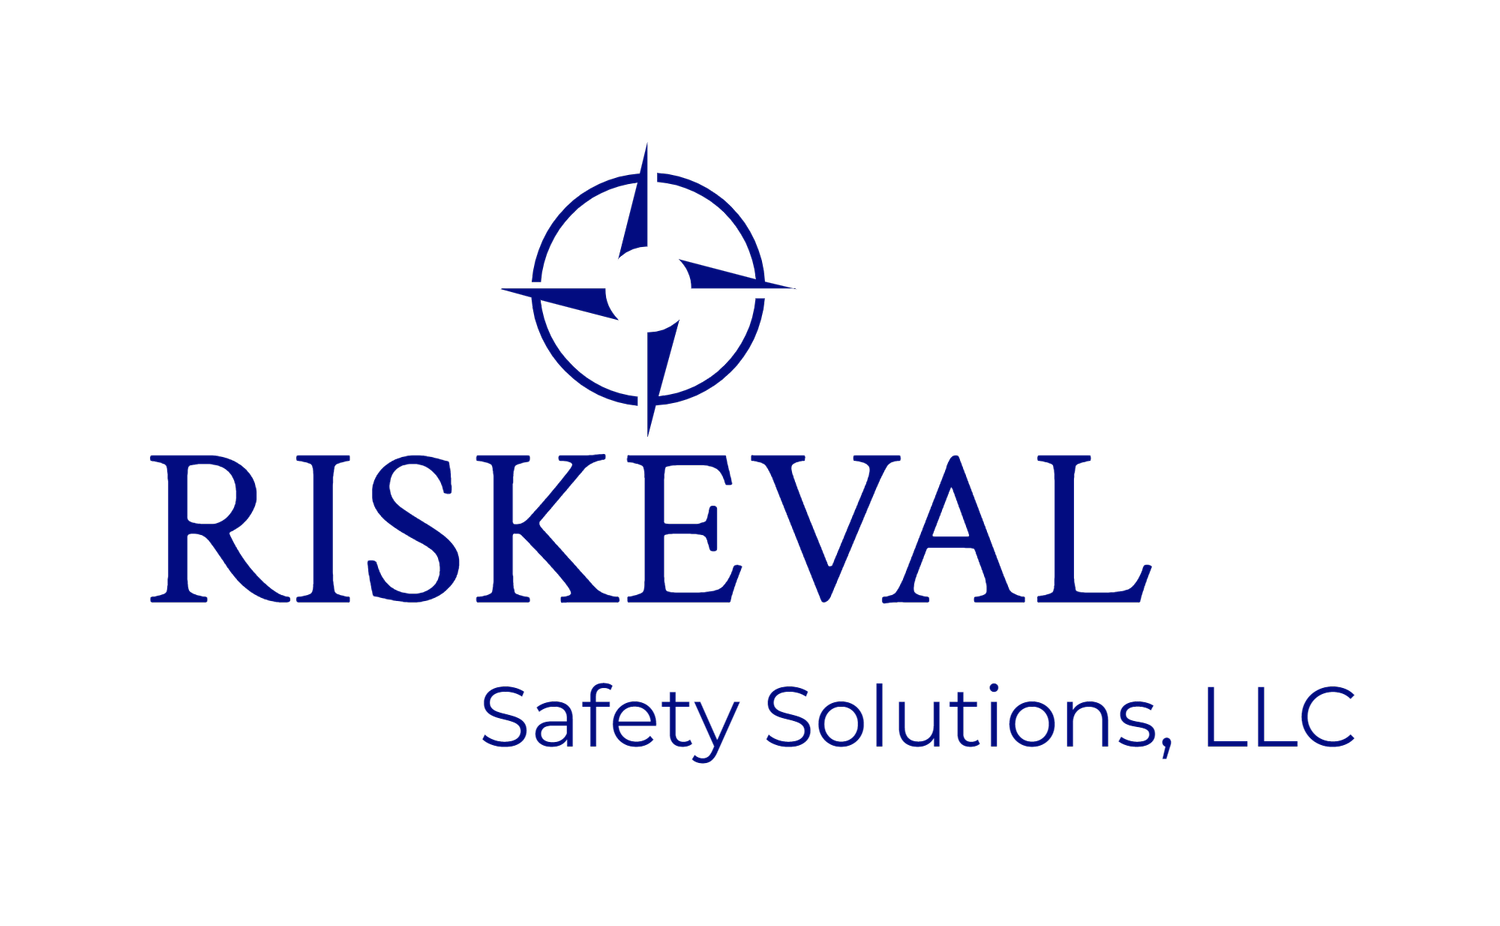 RISKEVAL Safety Solutions, LLC